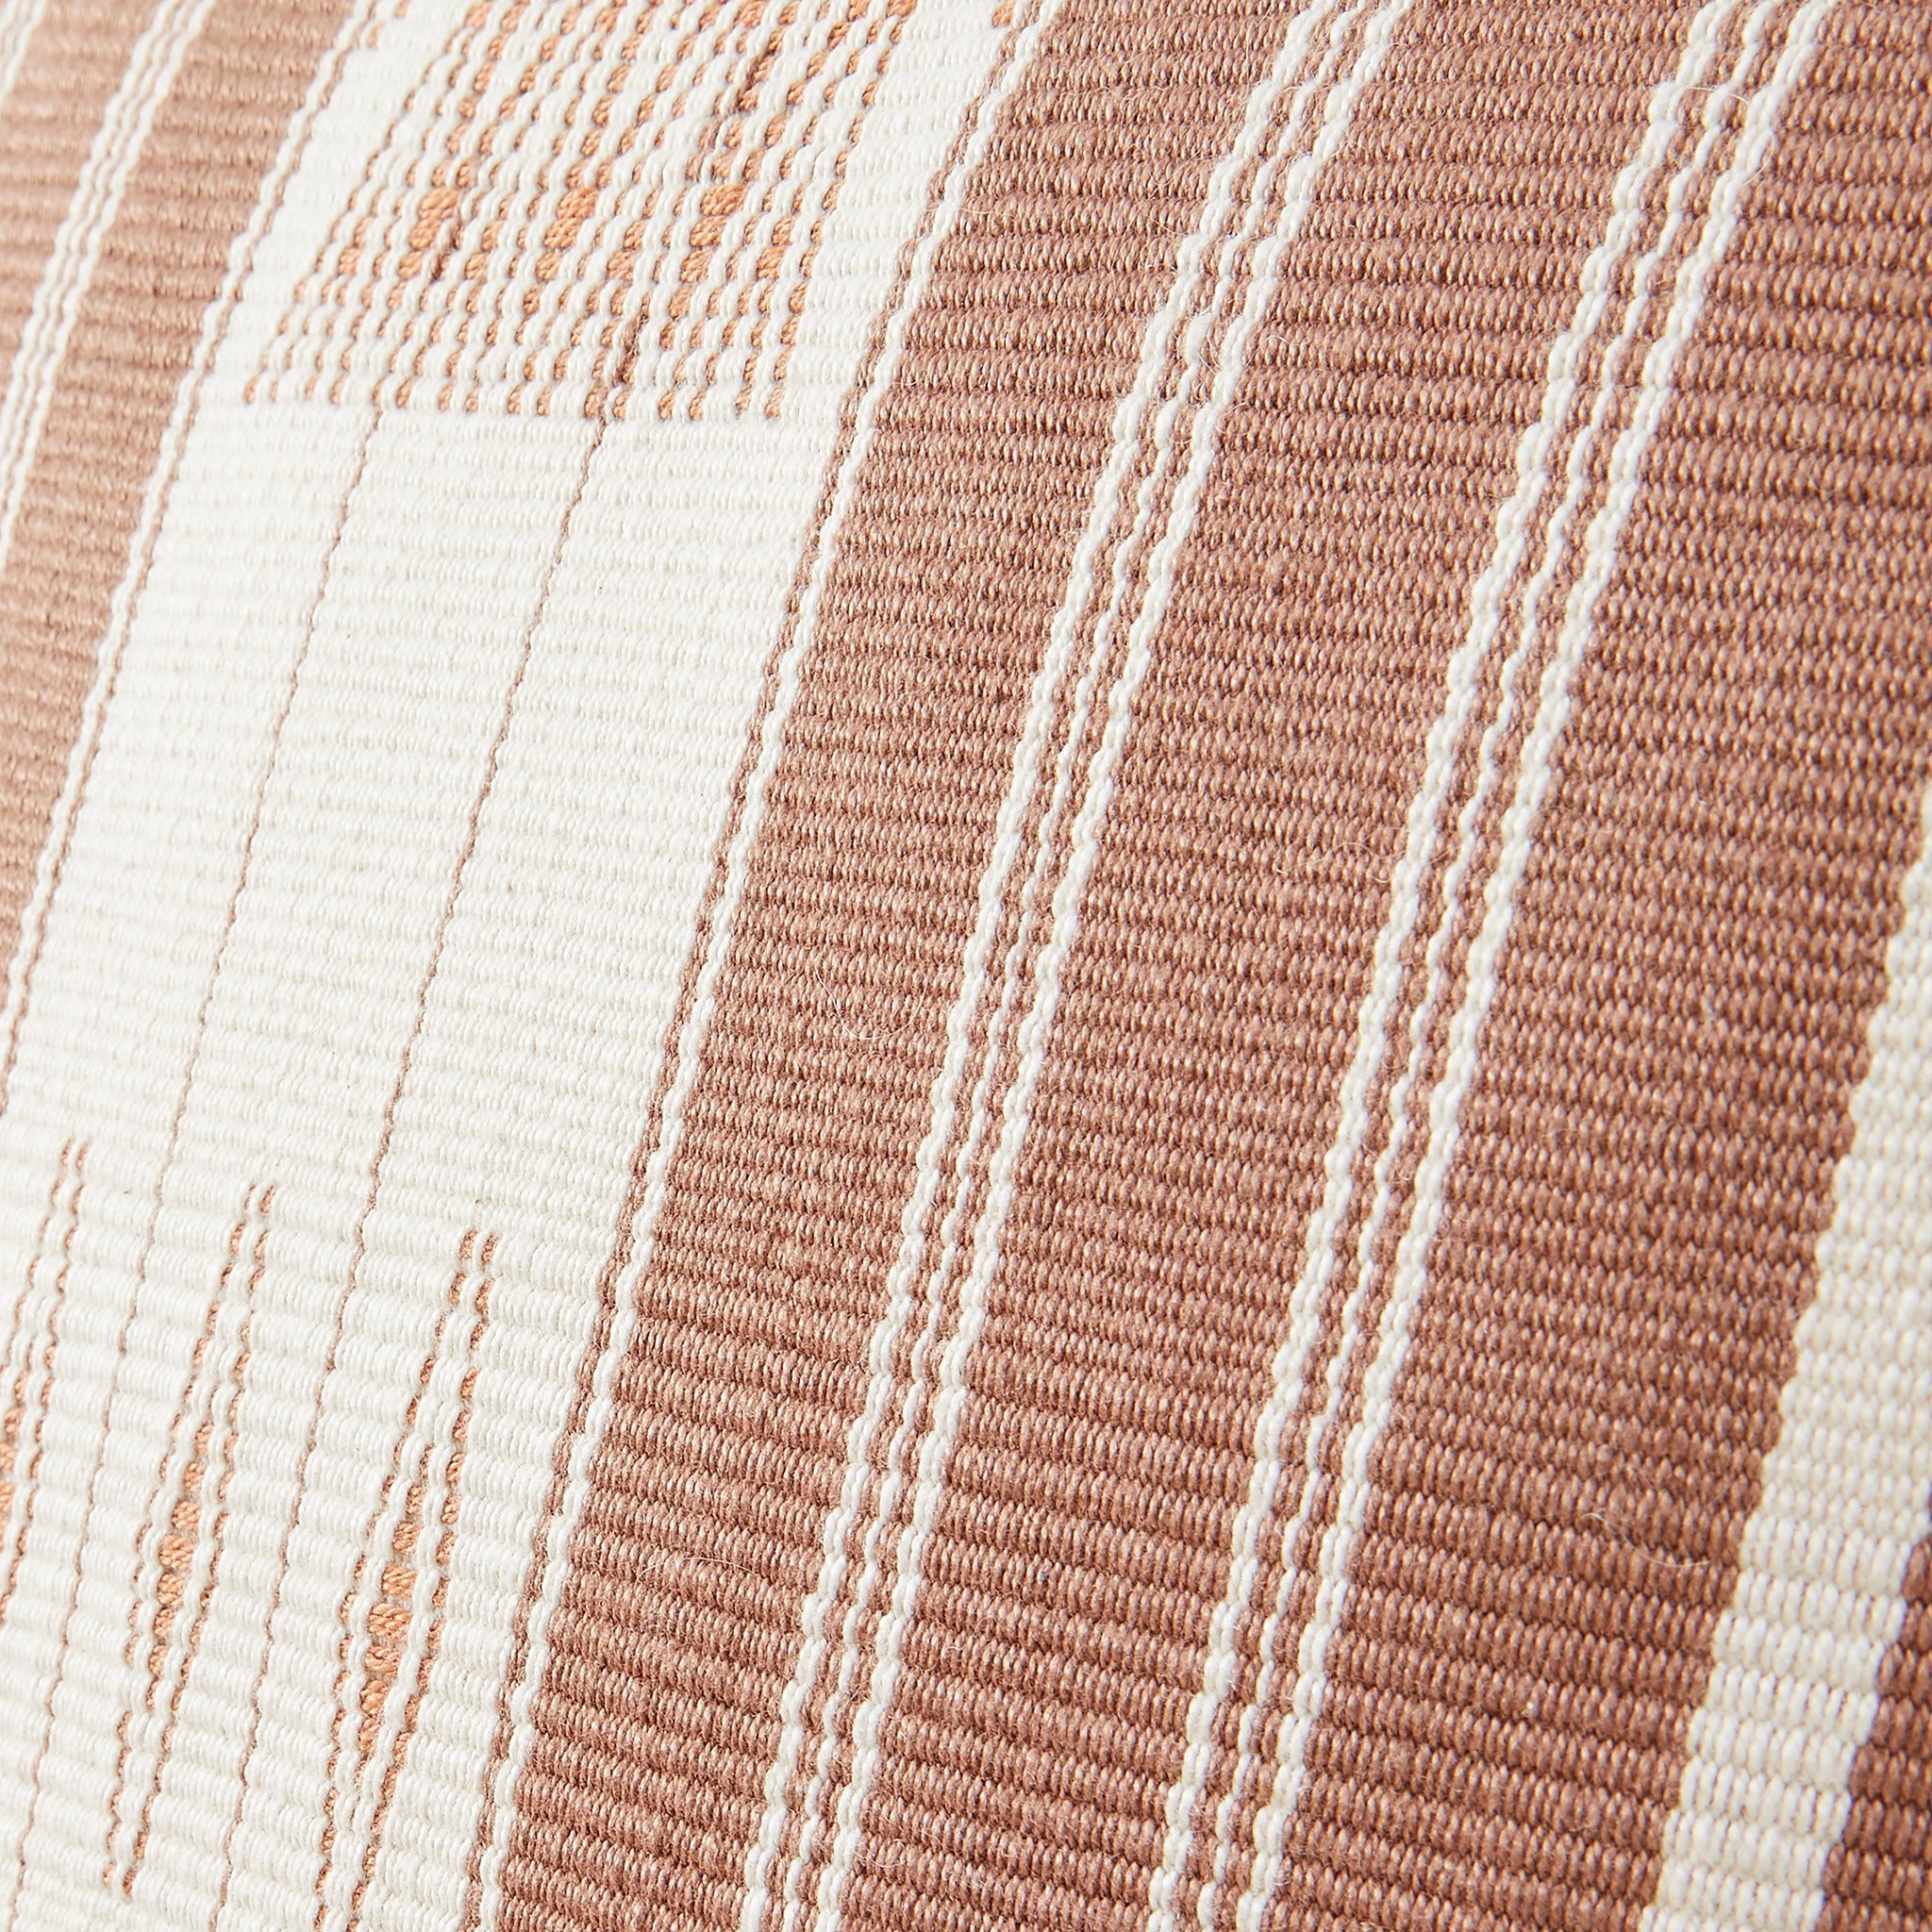 Detail view "Lipila" cushion, hand-woven in Nagaland, India